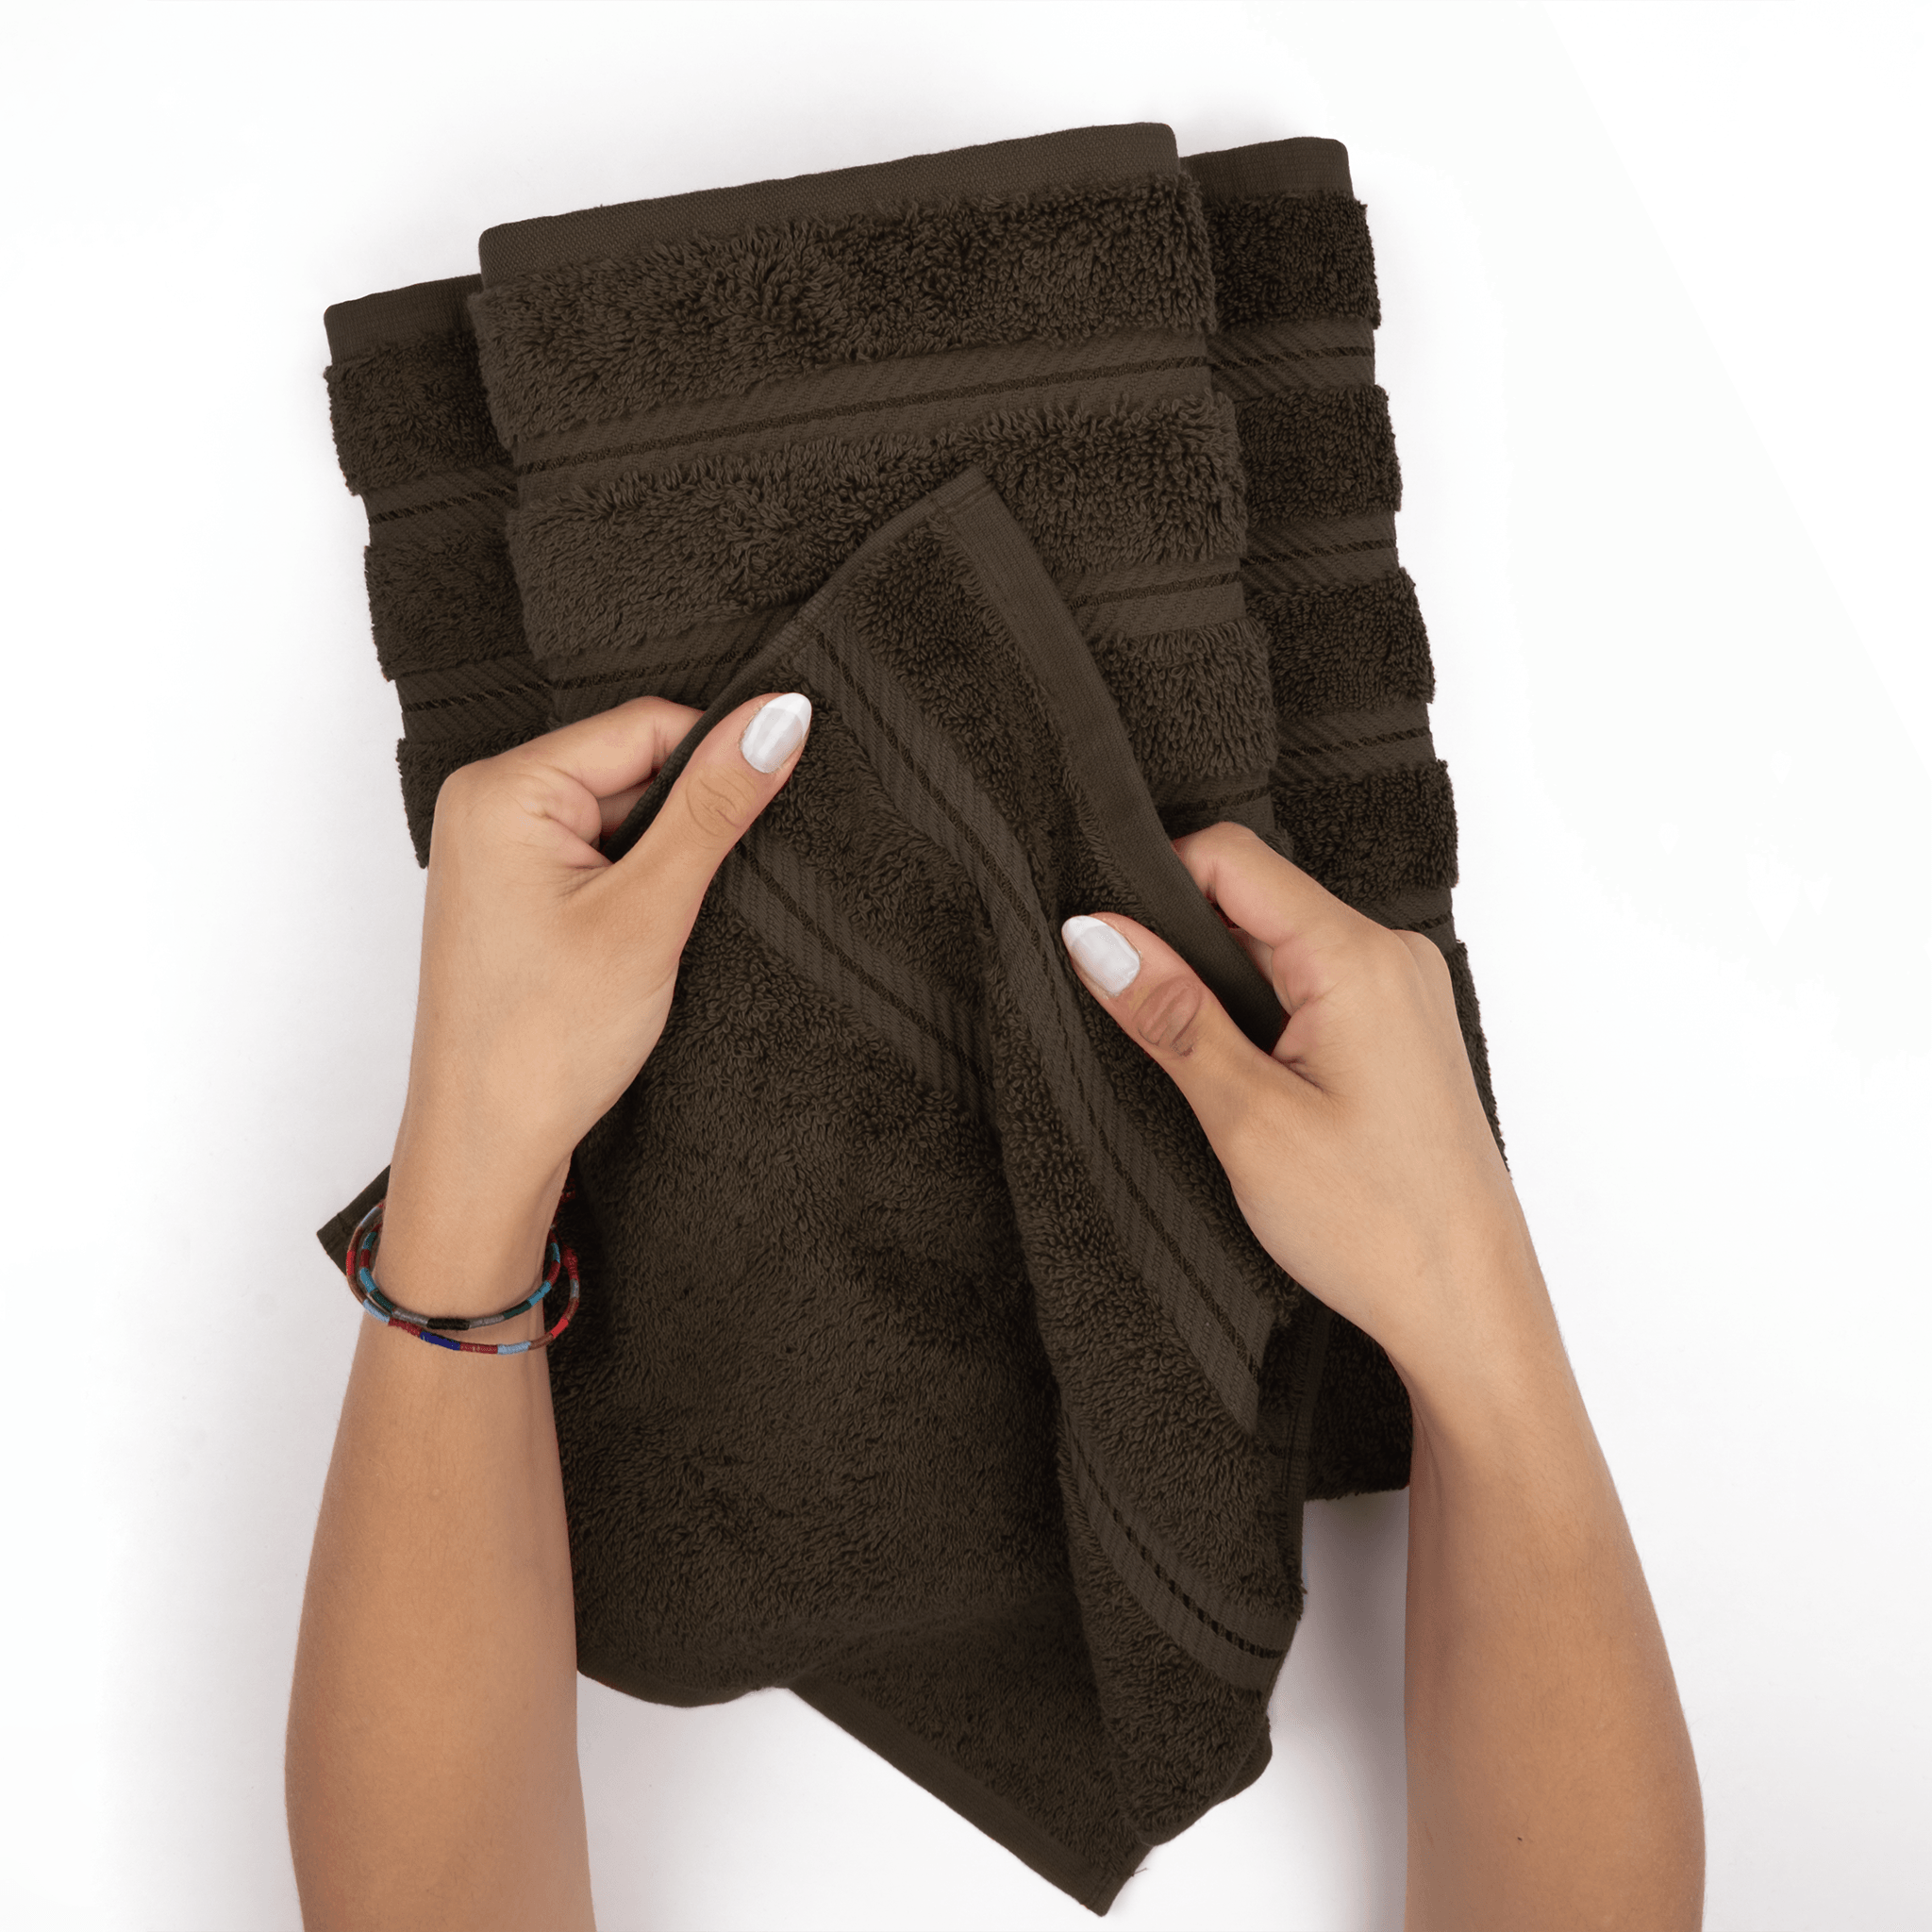 American Soft Linen - 3 Piece Turkish Cotton Towel Set - Chocolate-Brown - 5